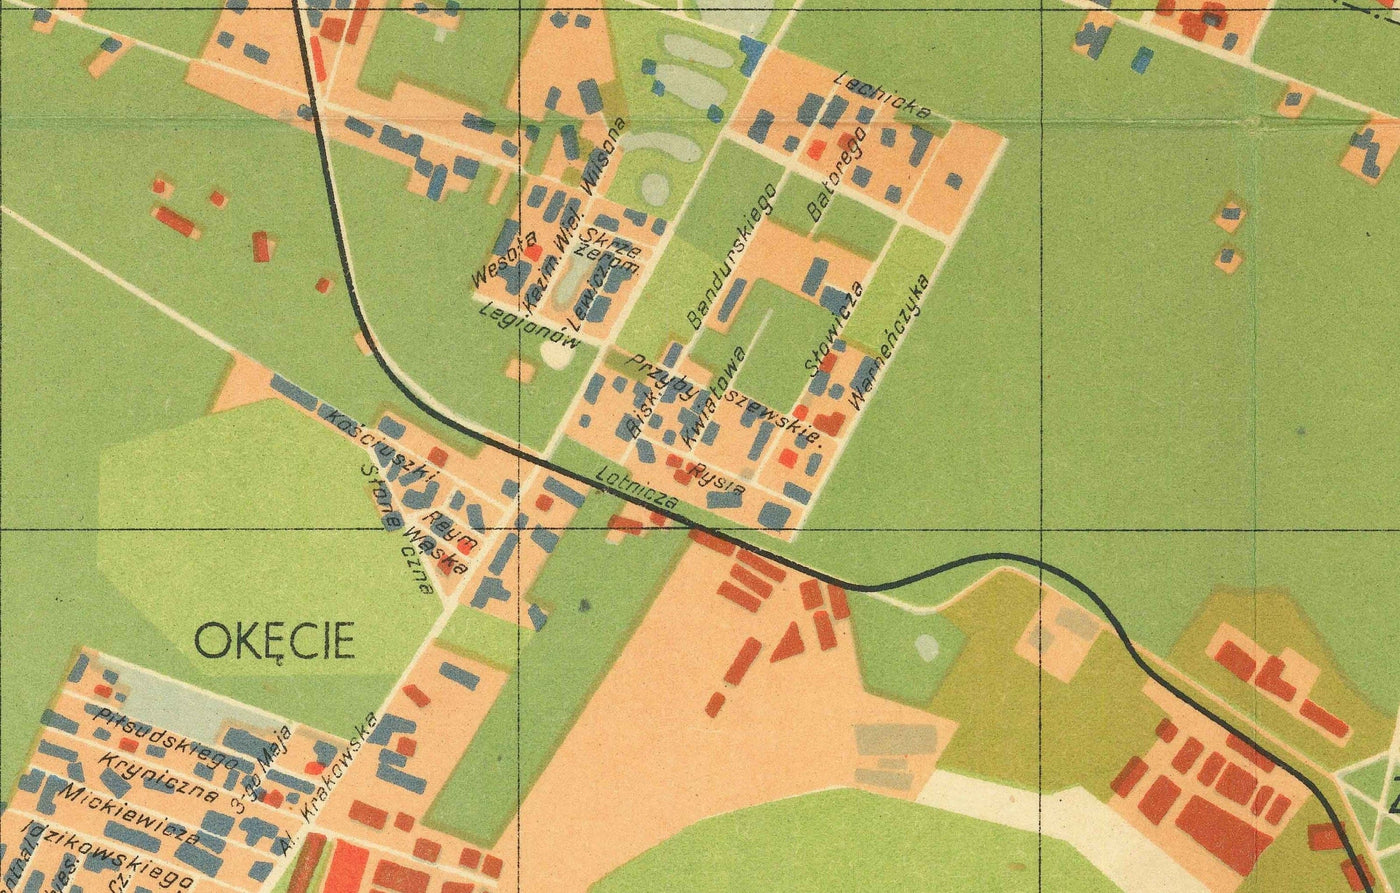 Old Map of the Nazi Destruction of Varsovie, 1949 - Cente censuré Soviétique WW2 - Old Town, Ghetto, Muranow, Praga